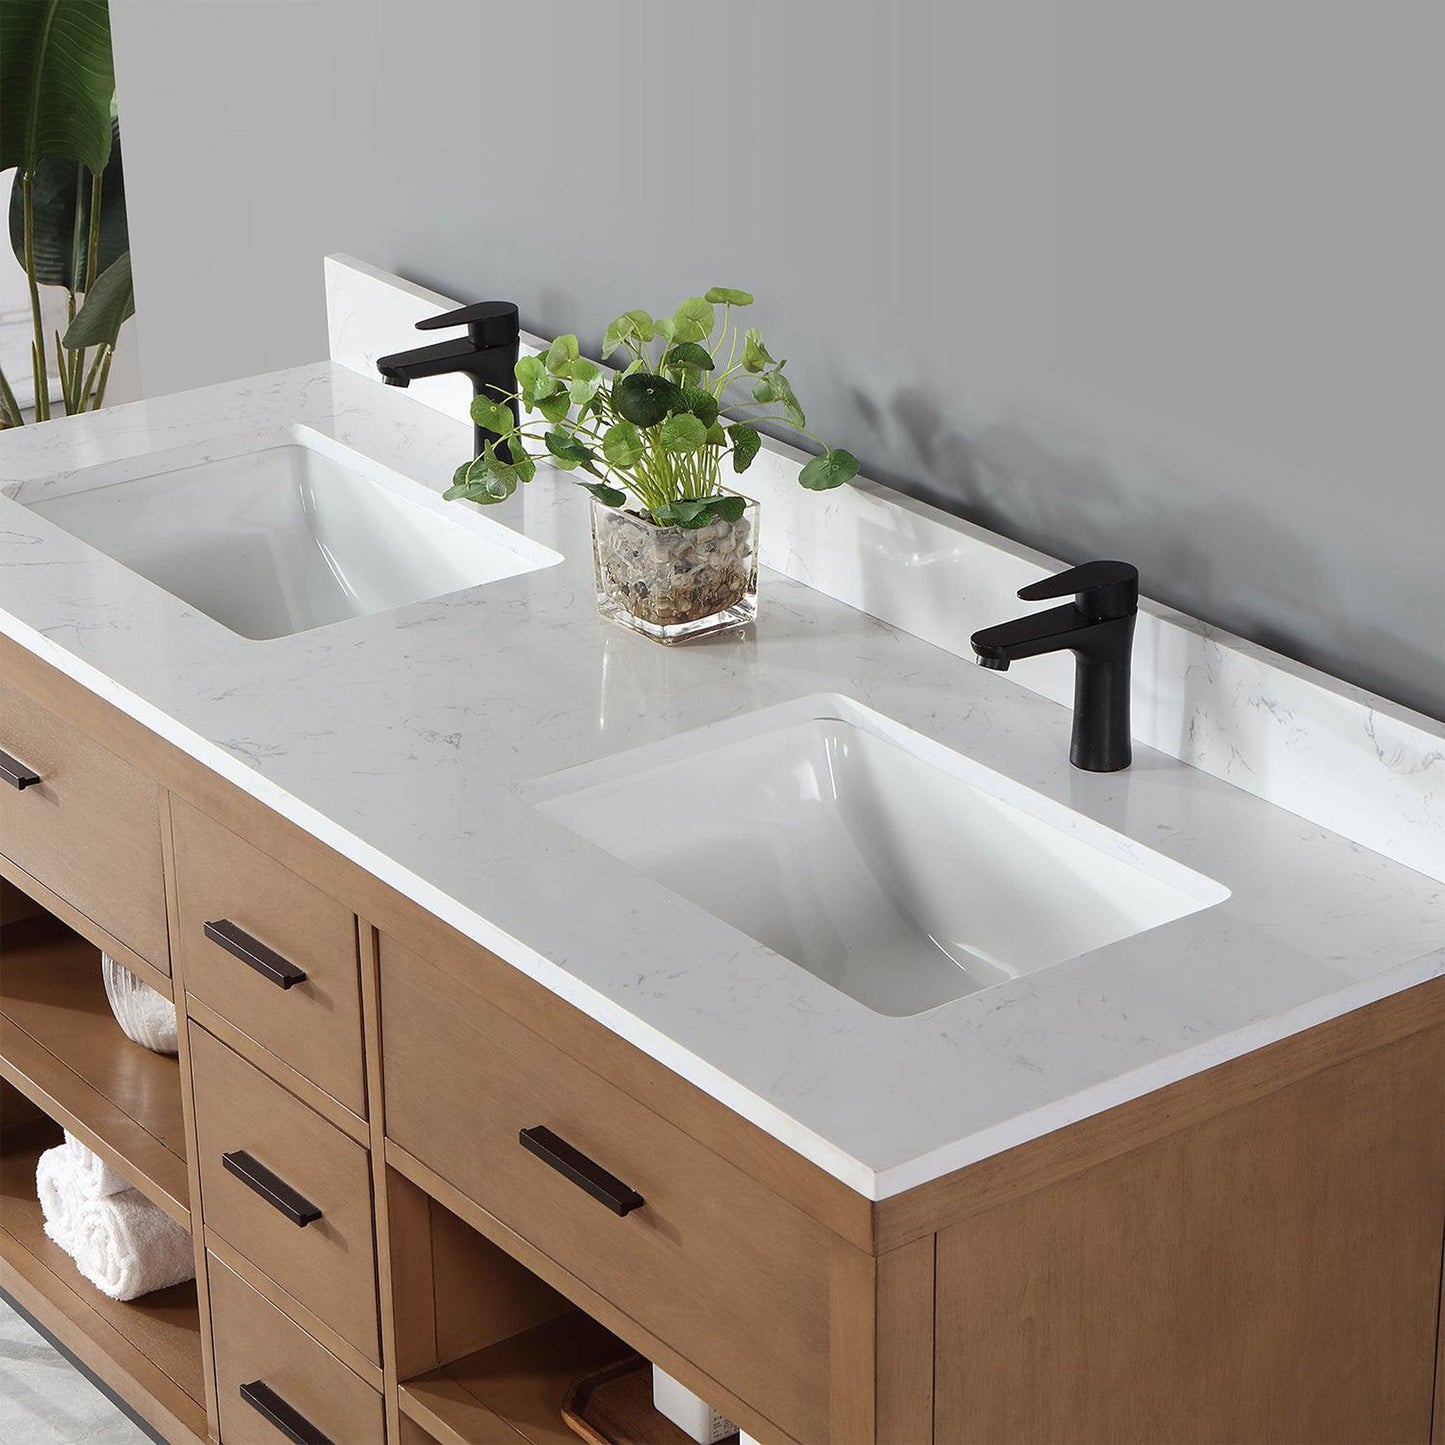 Altair Kesia 60" Brown Pine Freestanding Double Bathroom Vanity Set With Stylish Aosta White Composite Stone Top, Two Rectangular Undermount Ceramic Sinks, Overflow, and Backsplash